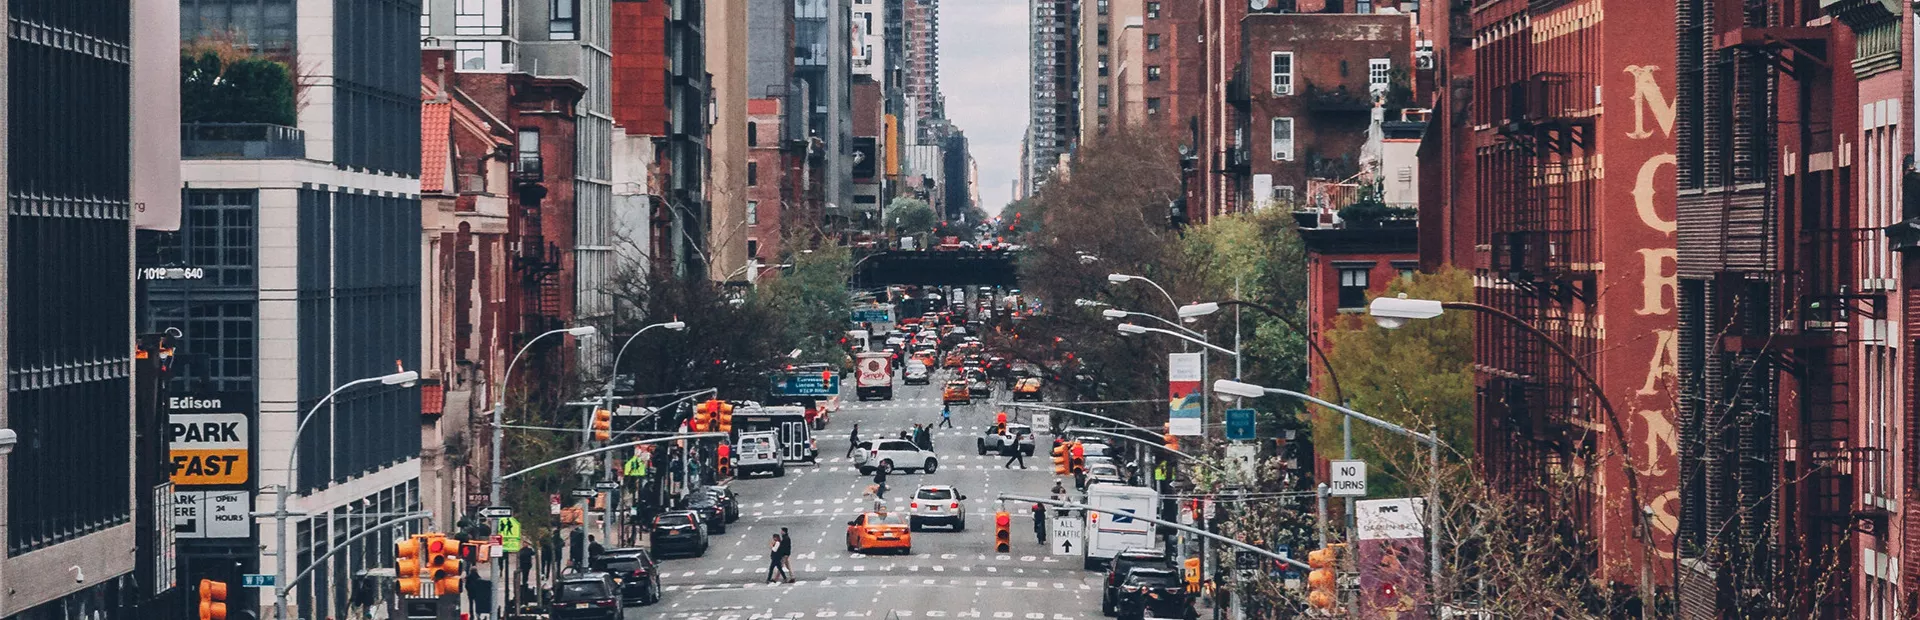 Busy street in New York City